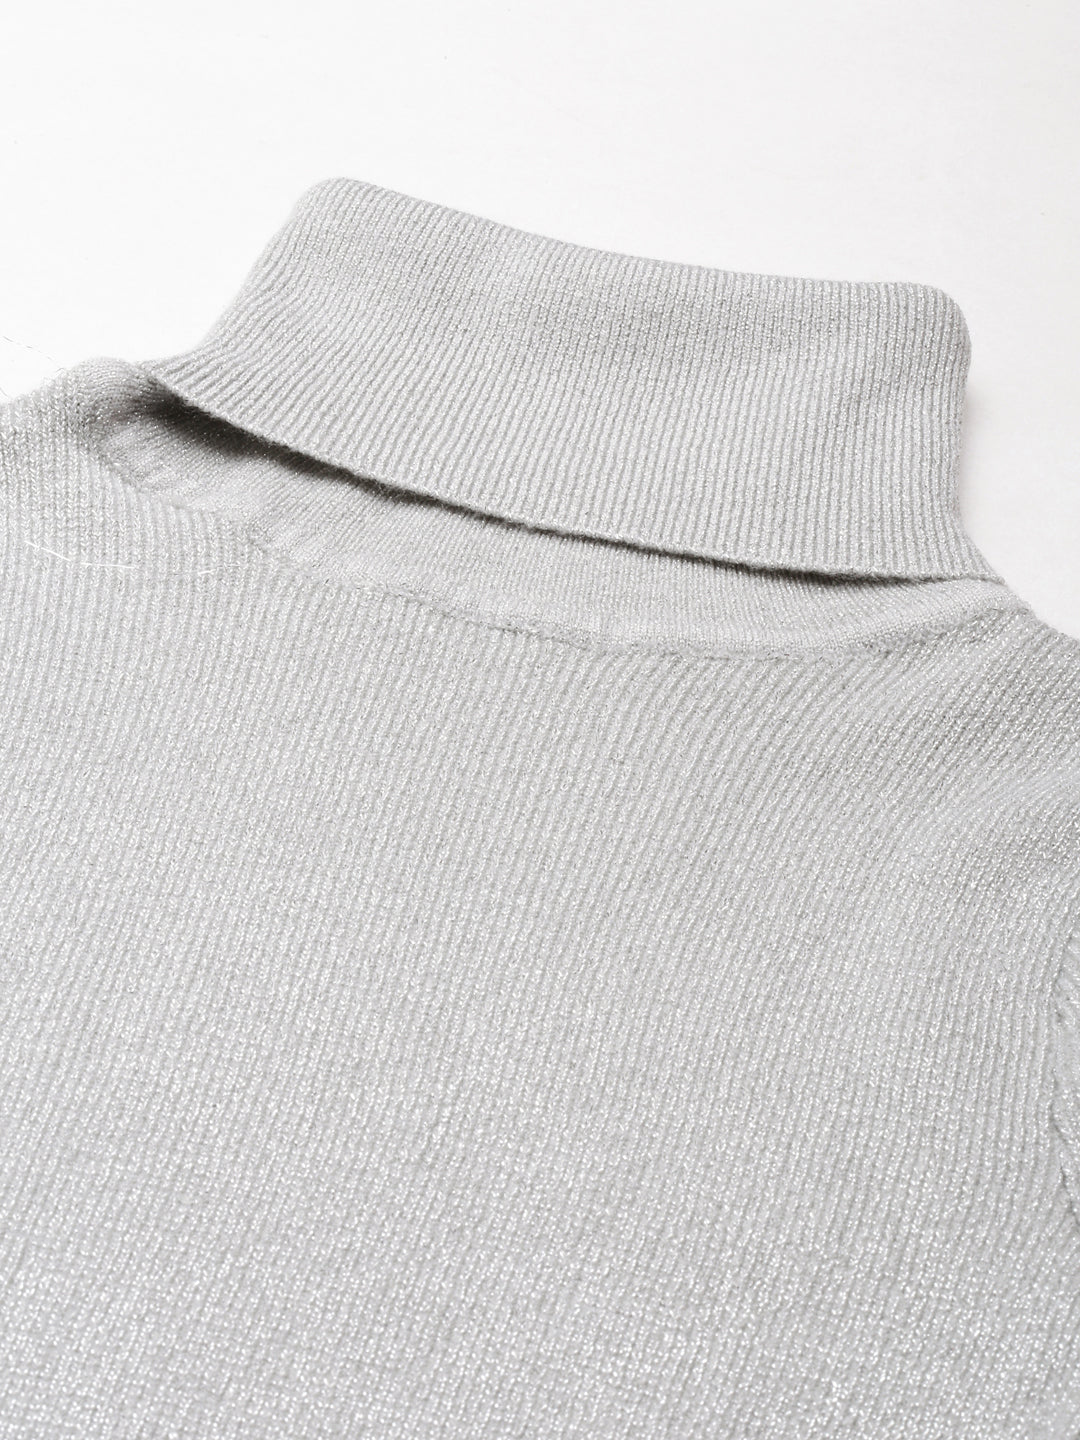 High Neck Embellished Regular Sleeves Fitted Grey Top